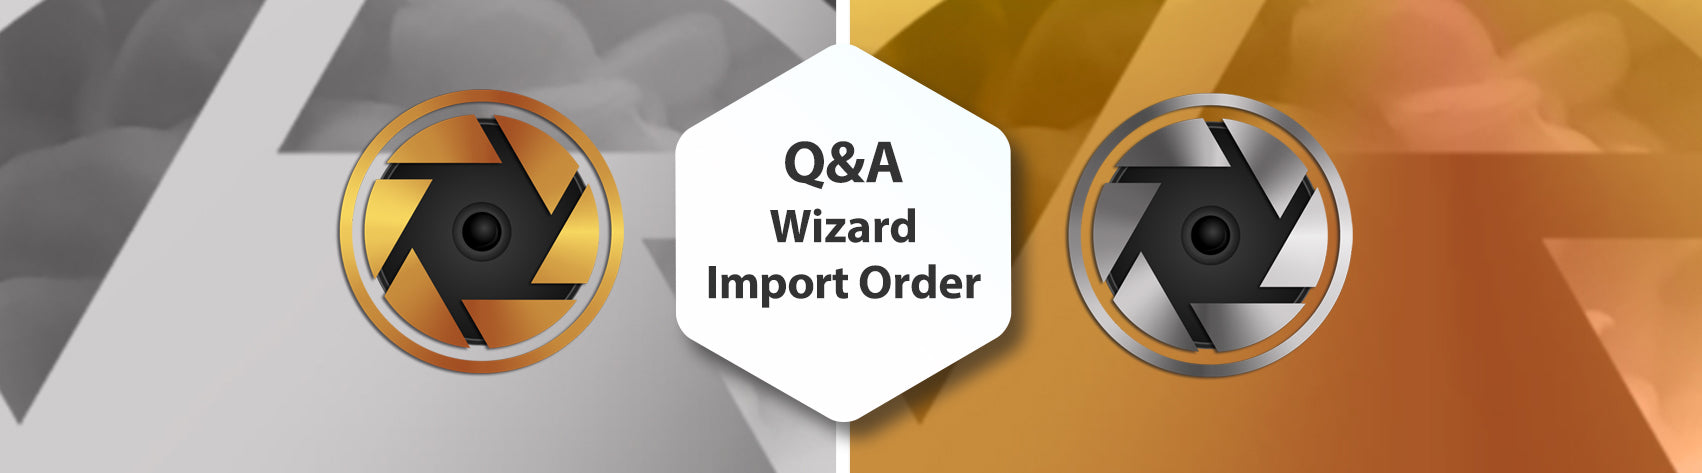 Q&A - Wizard Import Order